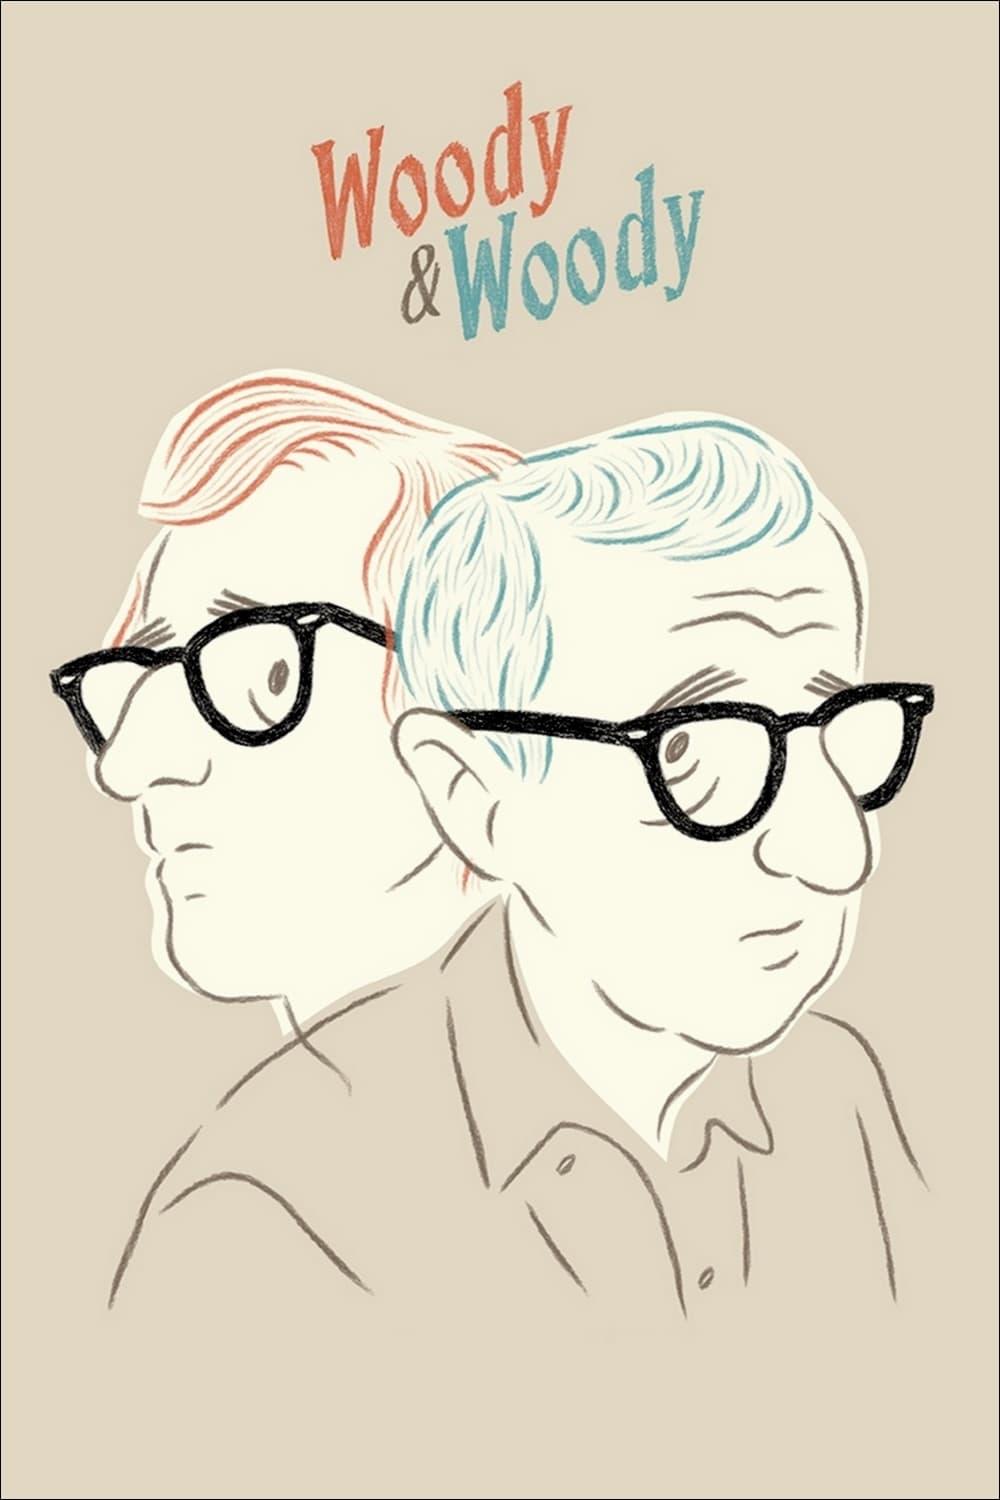 Woody & Woody poster